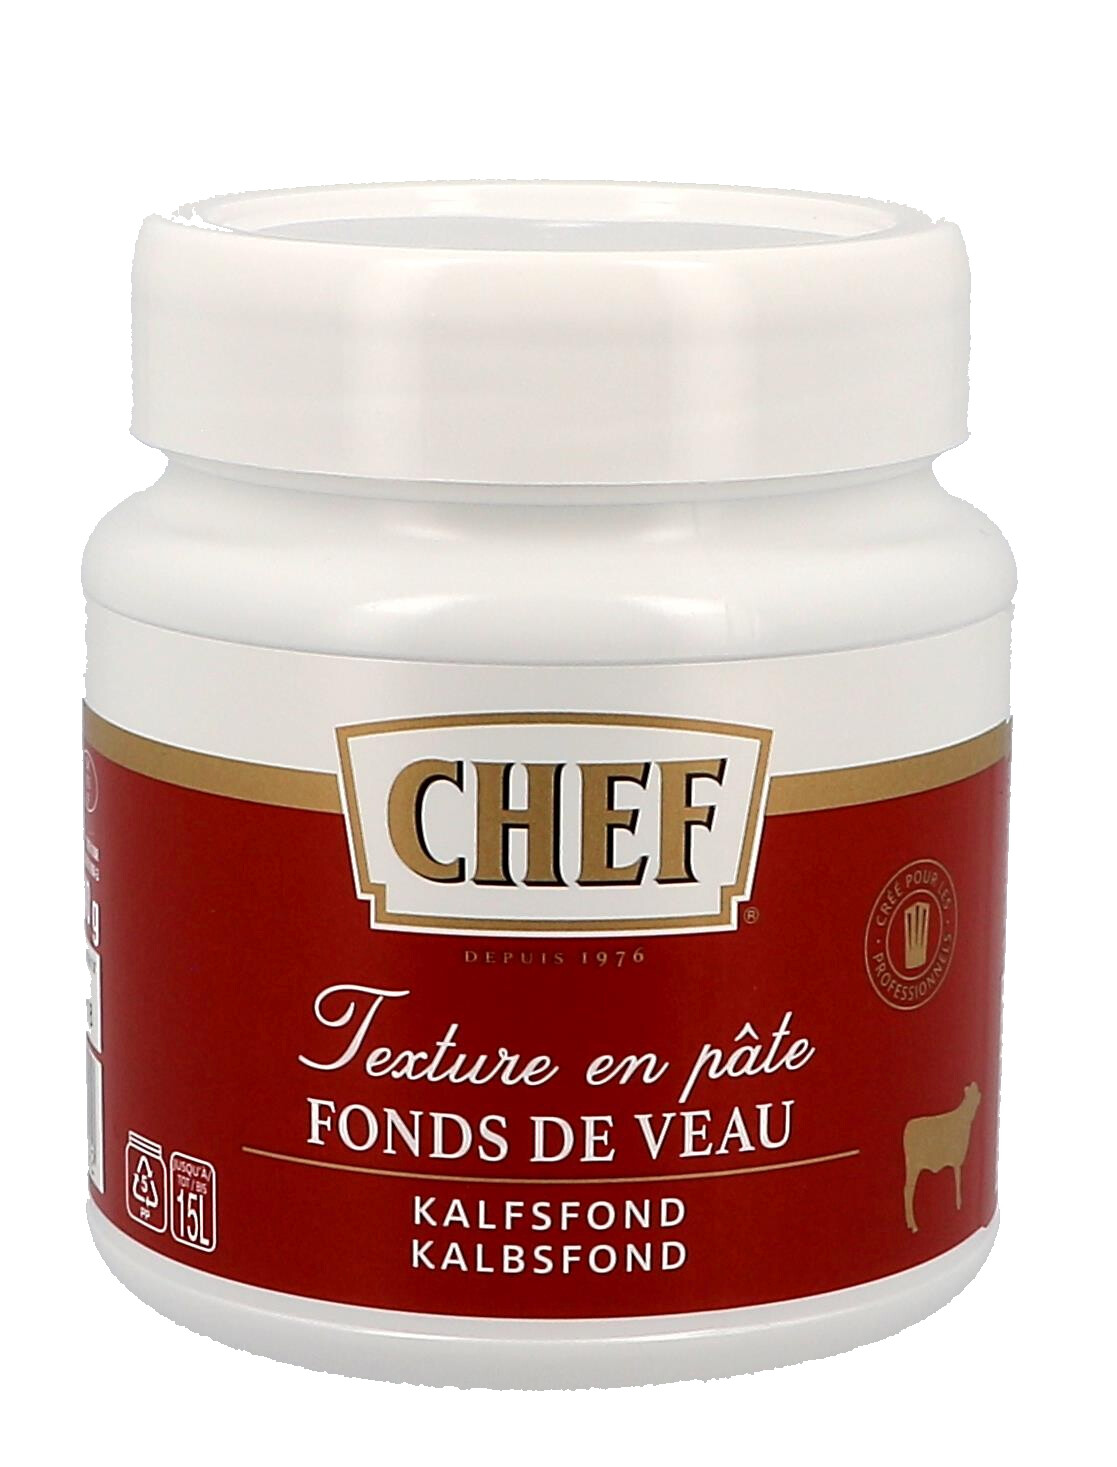 Chef Premium white veal stock paste 640gr Nestlé Professional